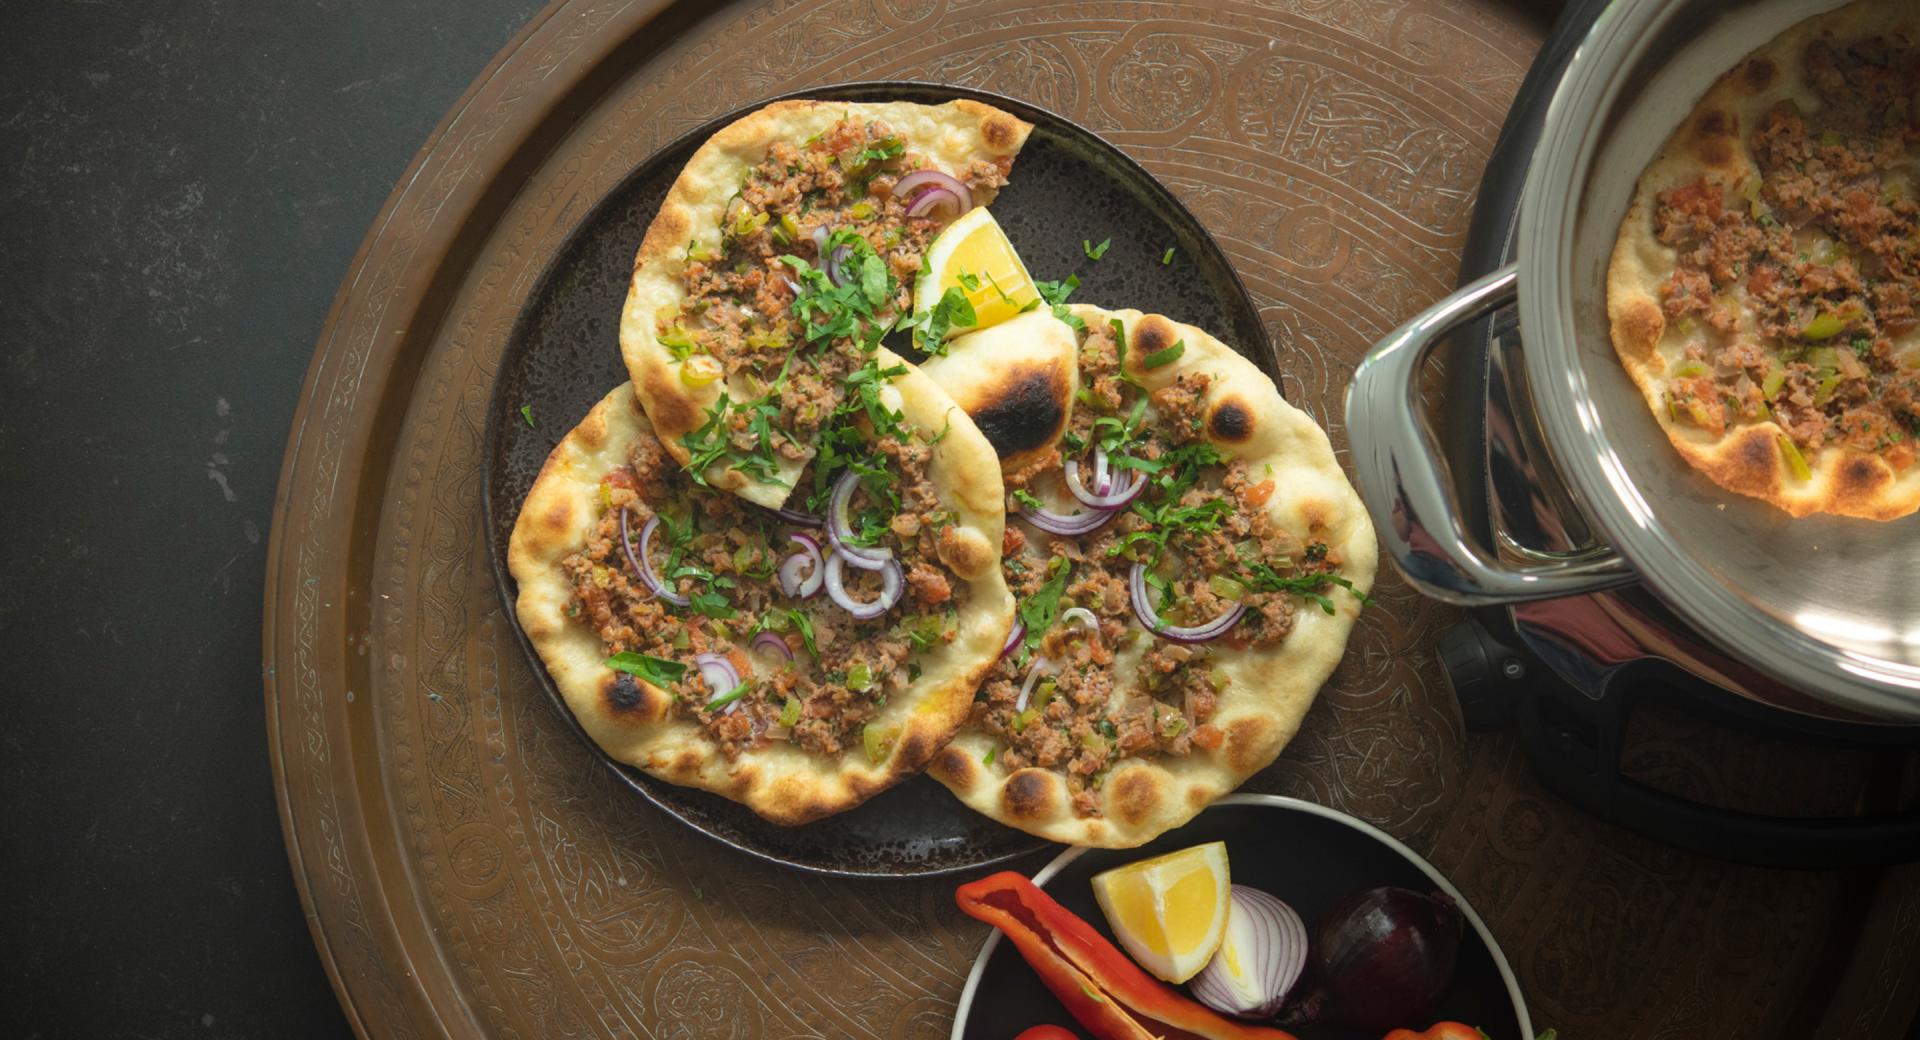 Turkish Pizza (Lahmacun)